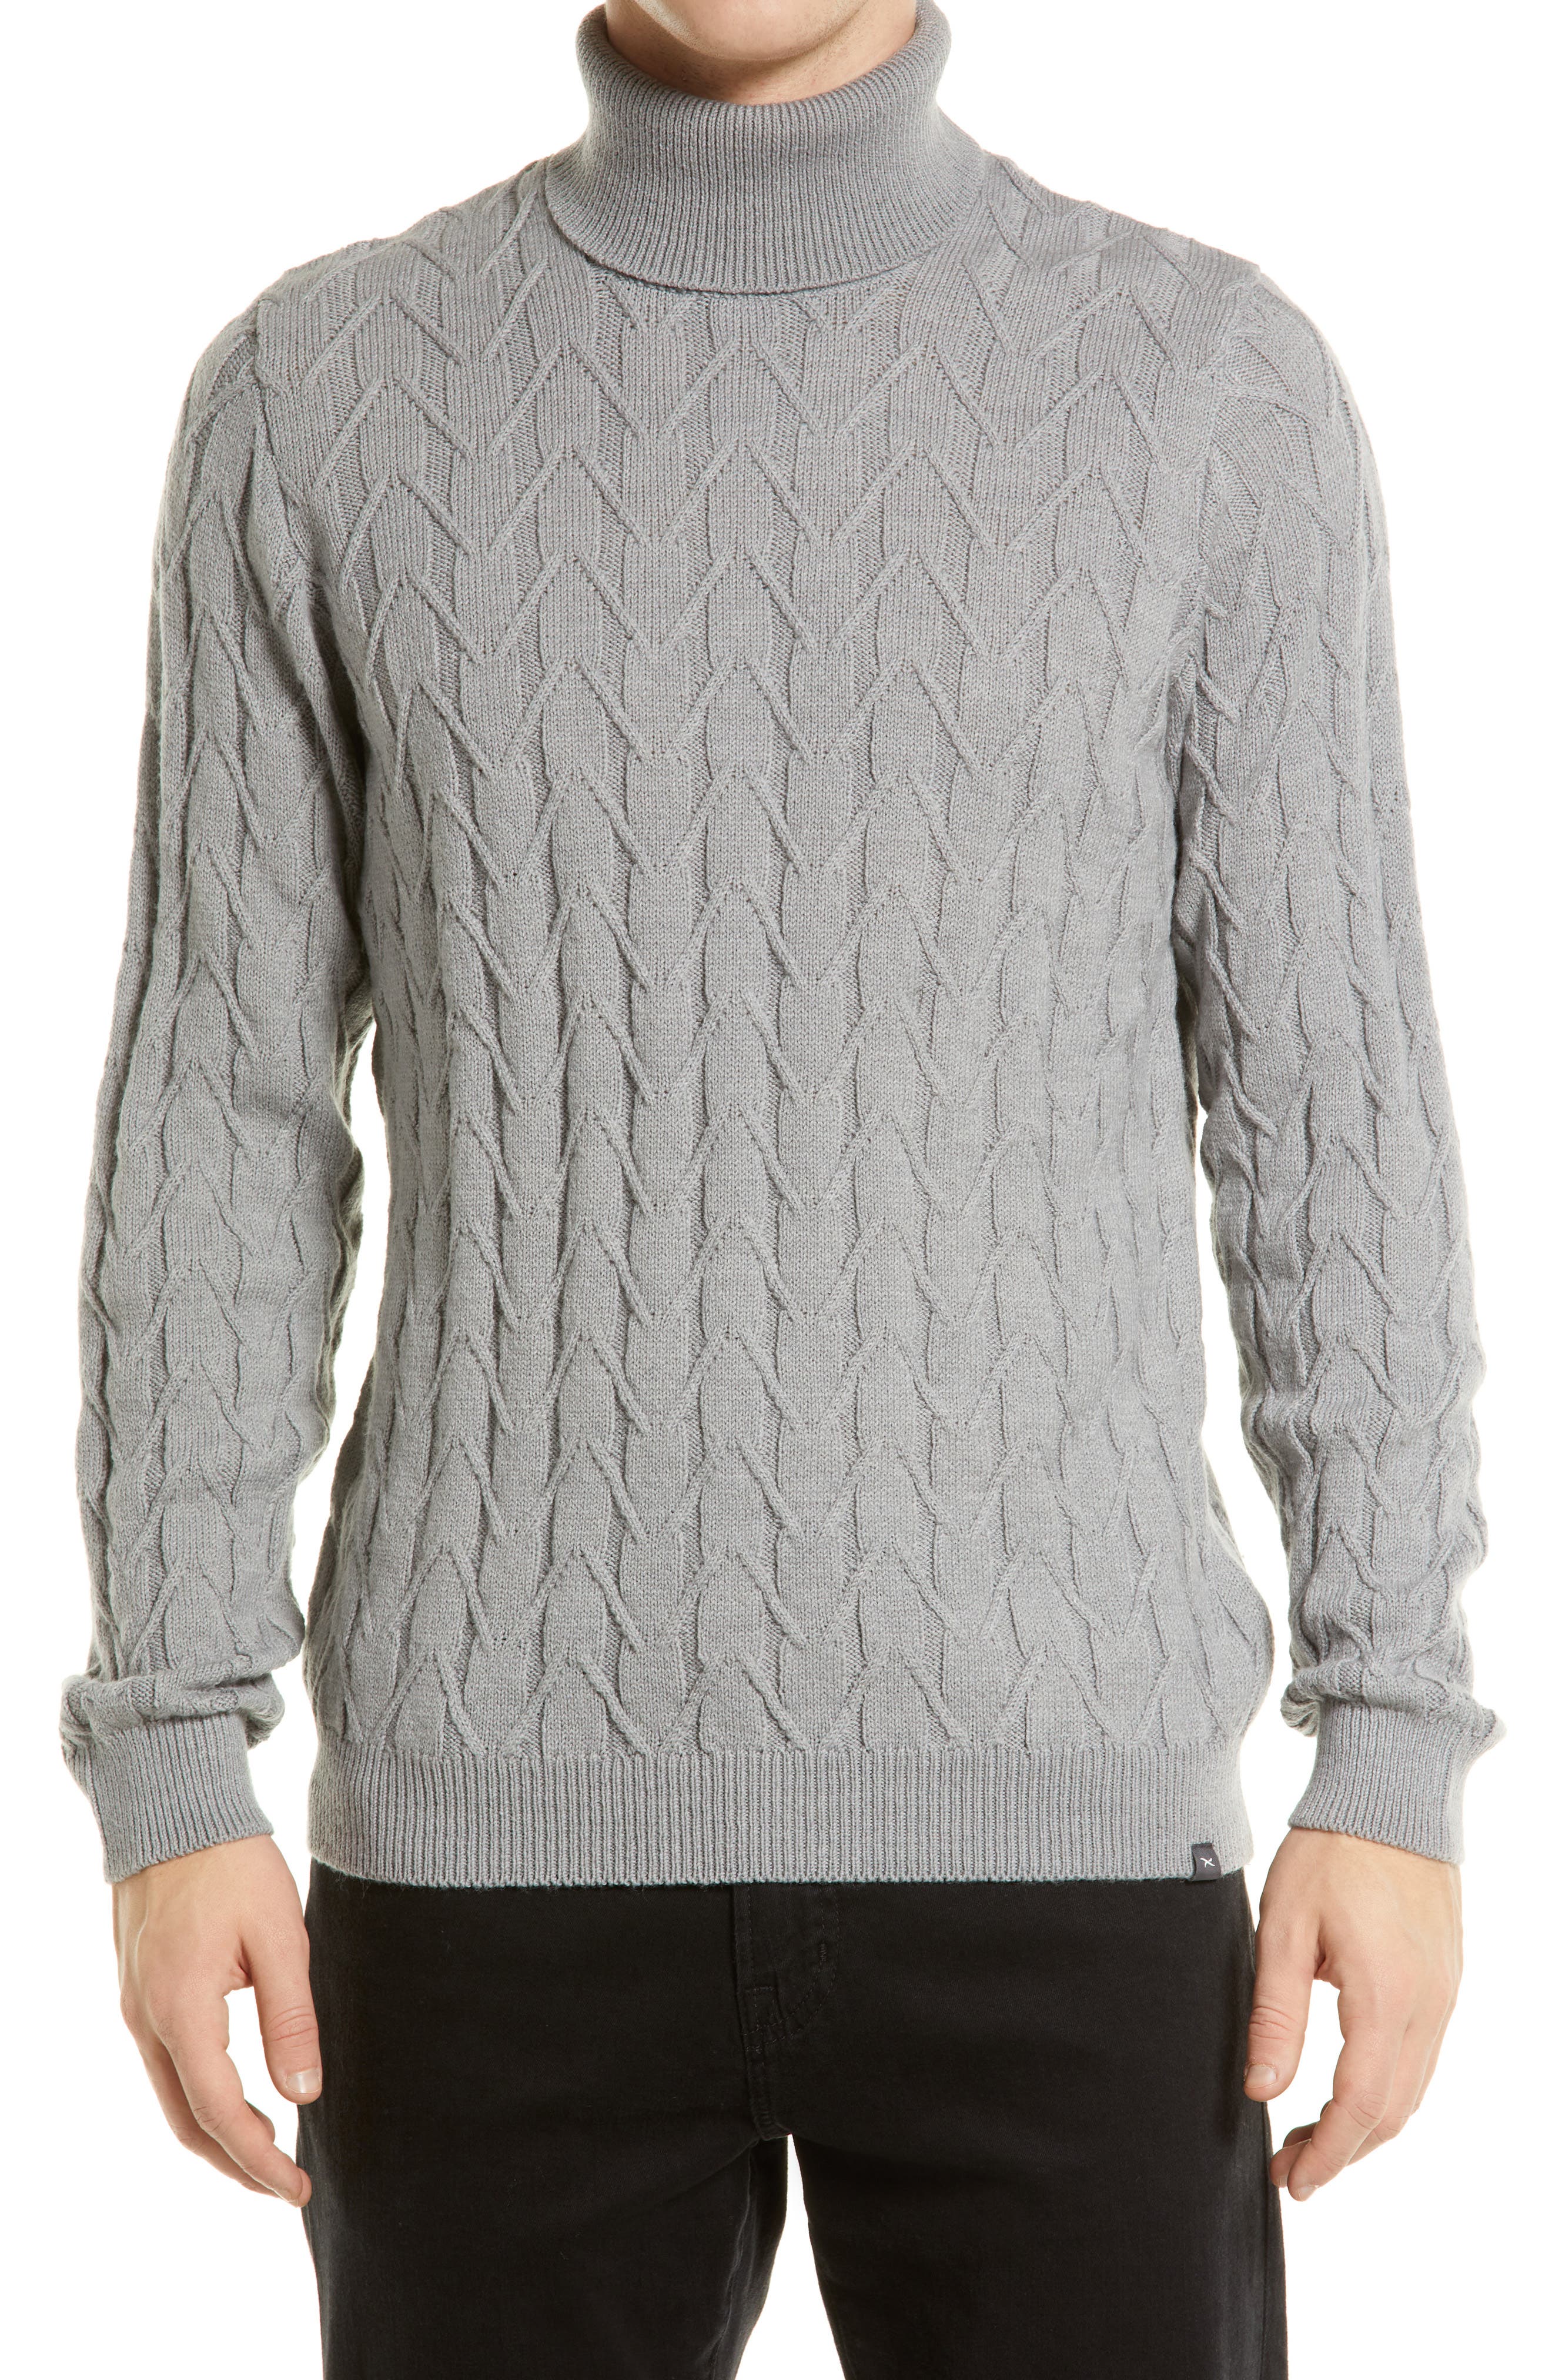 Kaured Stylist Mens Knit Slim Fit Turtleneck Soft Warm Pullovers Sweaters 